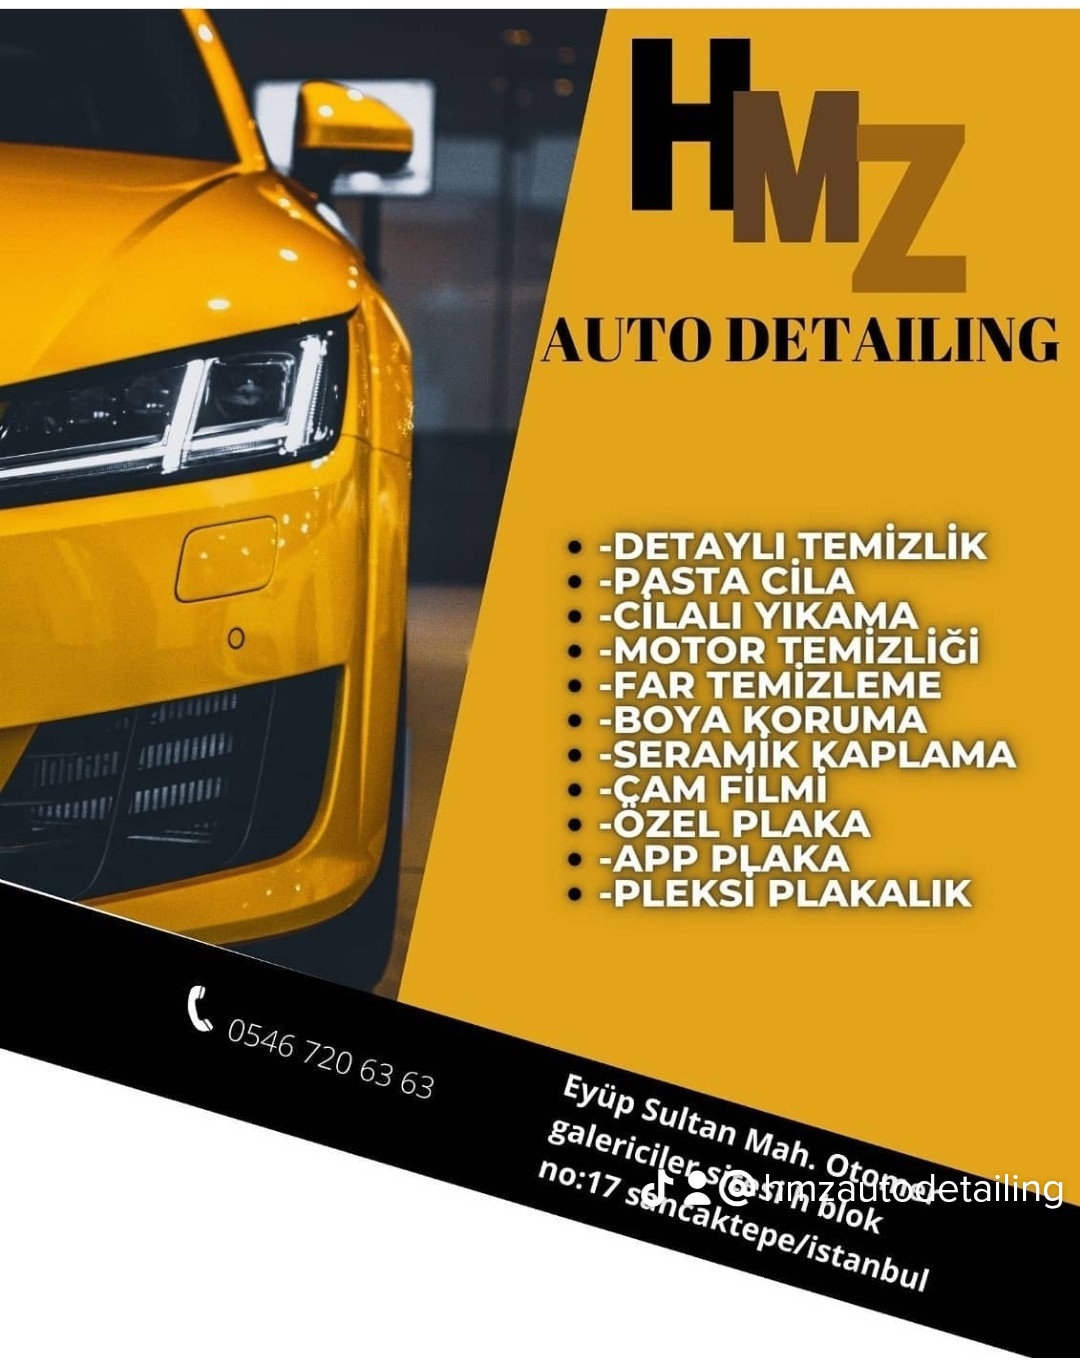 HMZ Auto Detailing